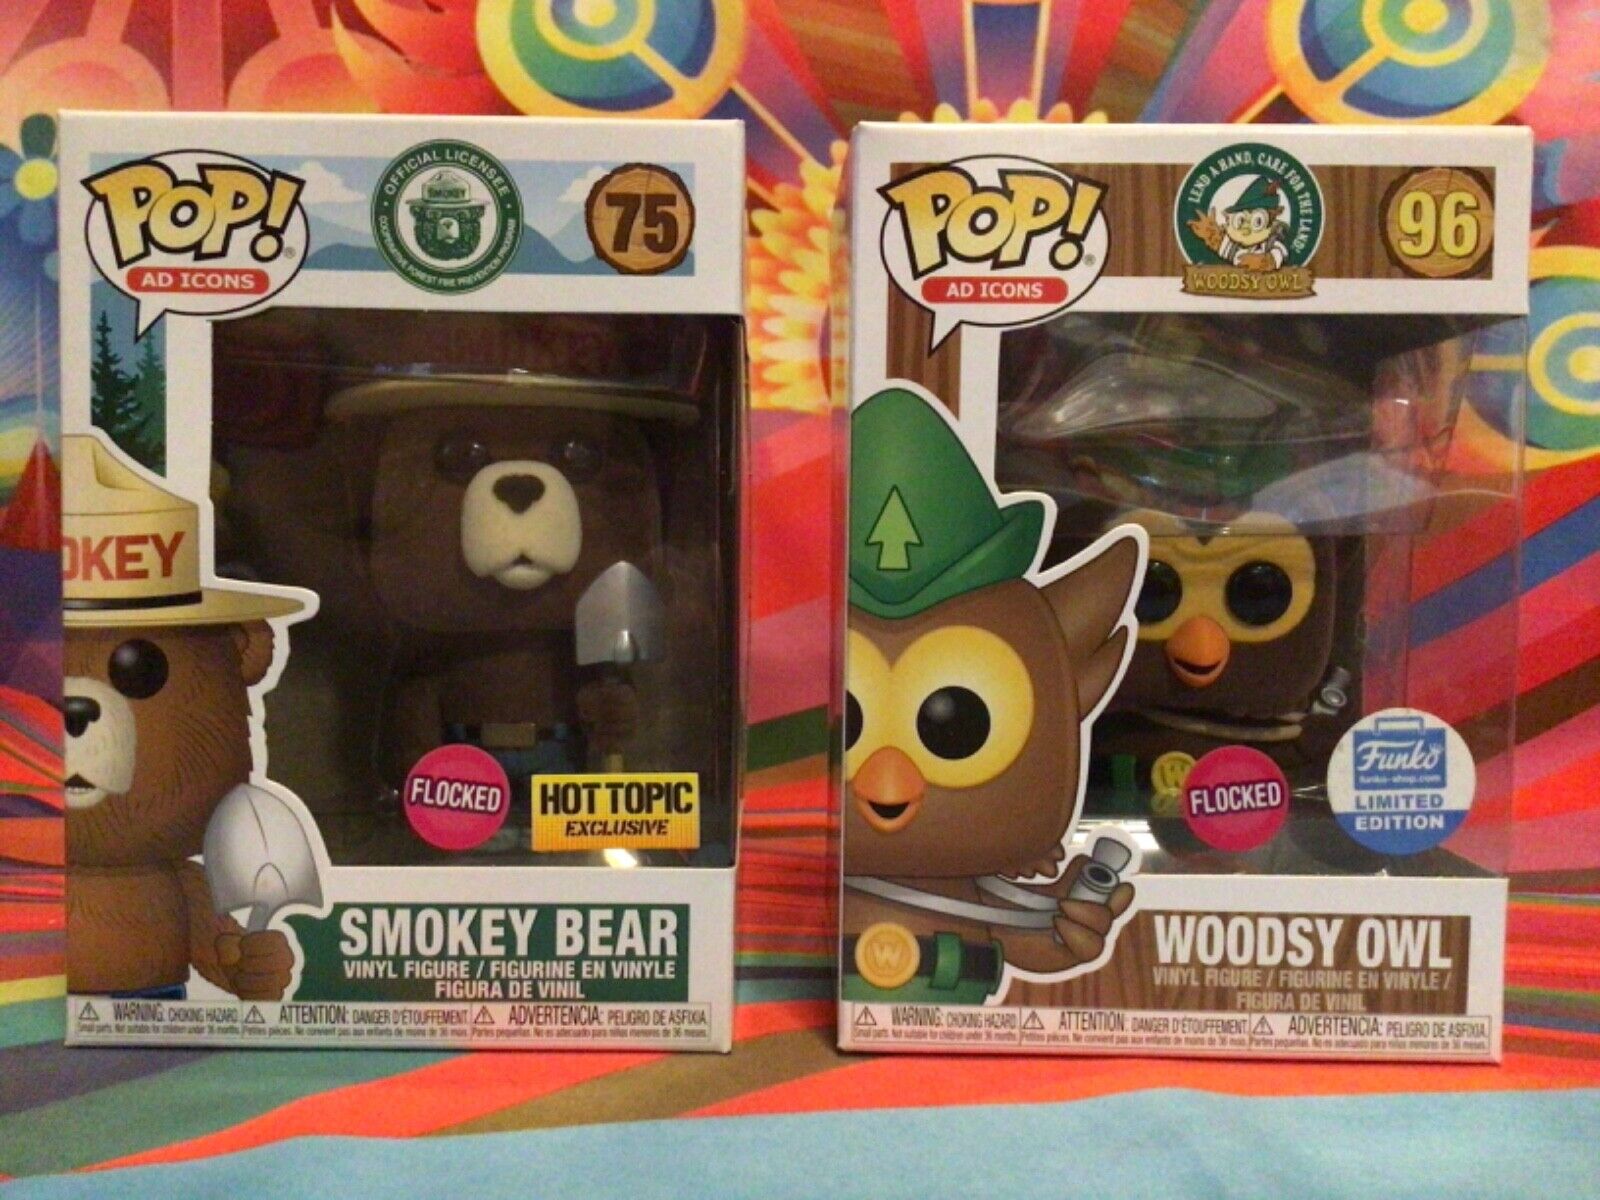 funko pop woodsy owl #96 & smokey bear #75 both are flocked, NIB, minty fresh